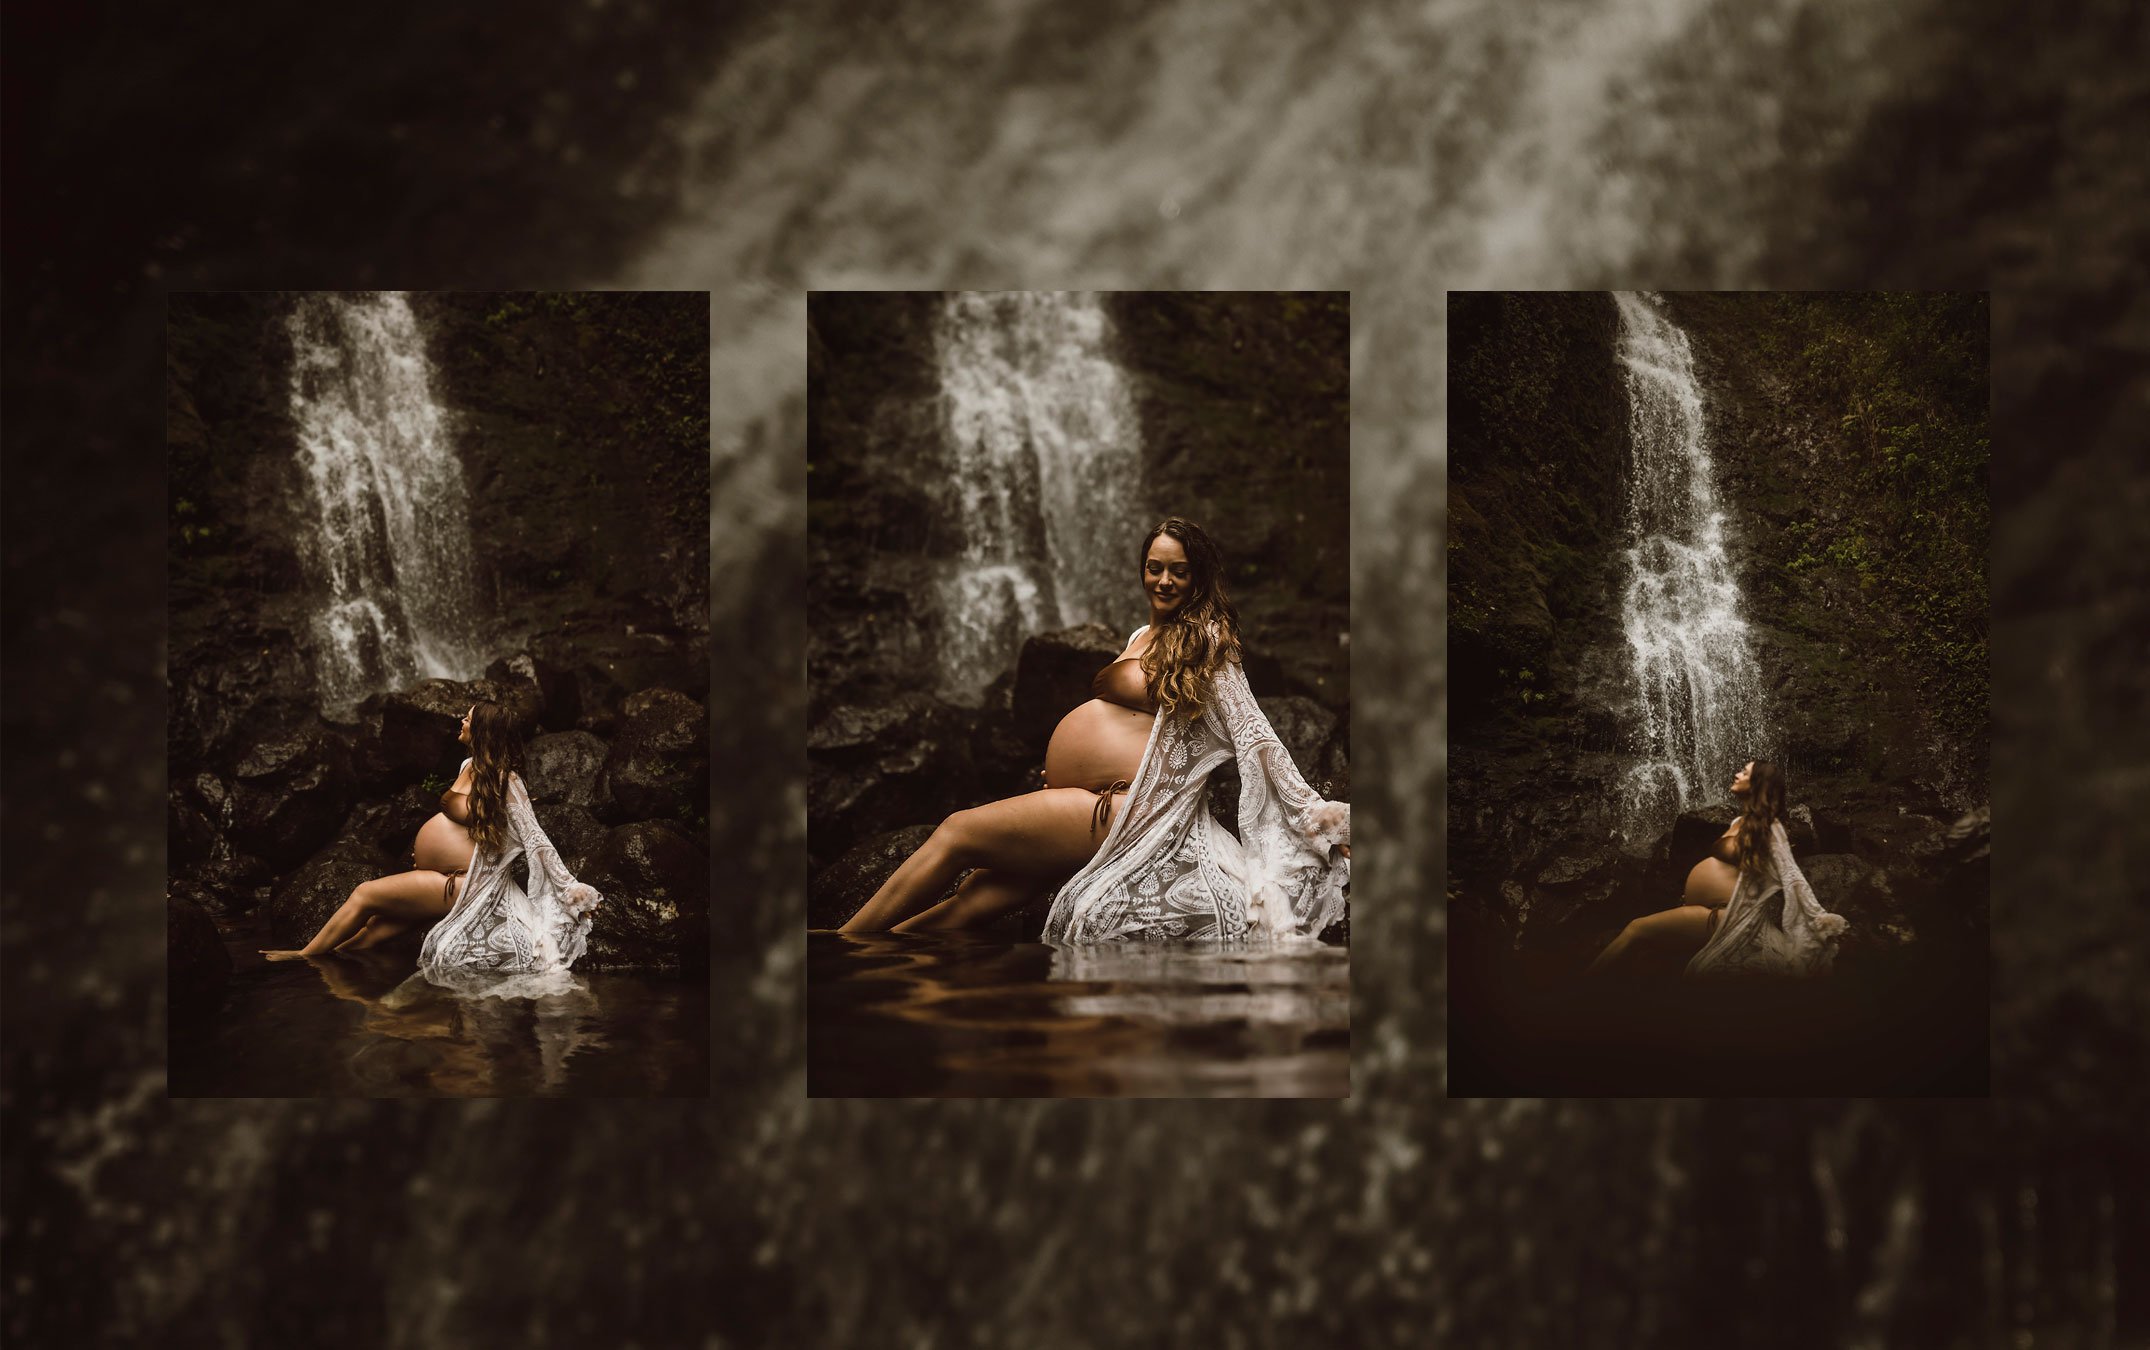 oahu-hawaii-waterfall-maternity-photos-lulumahu-10.jpg